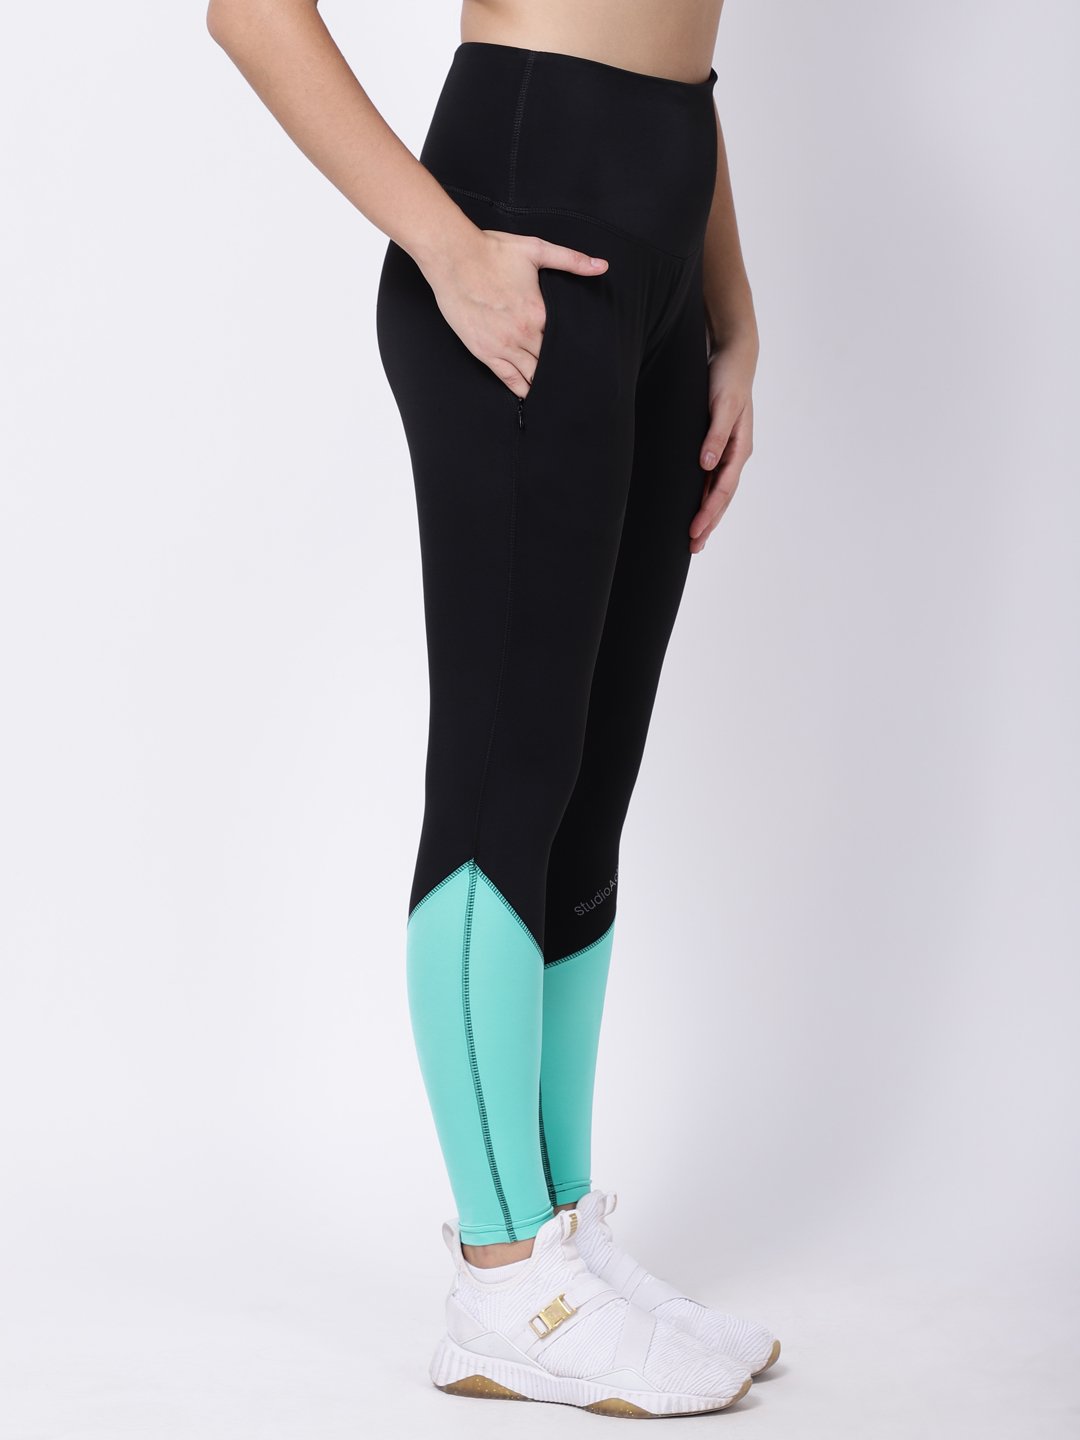 Black Turquoise Style Diva Leggings